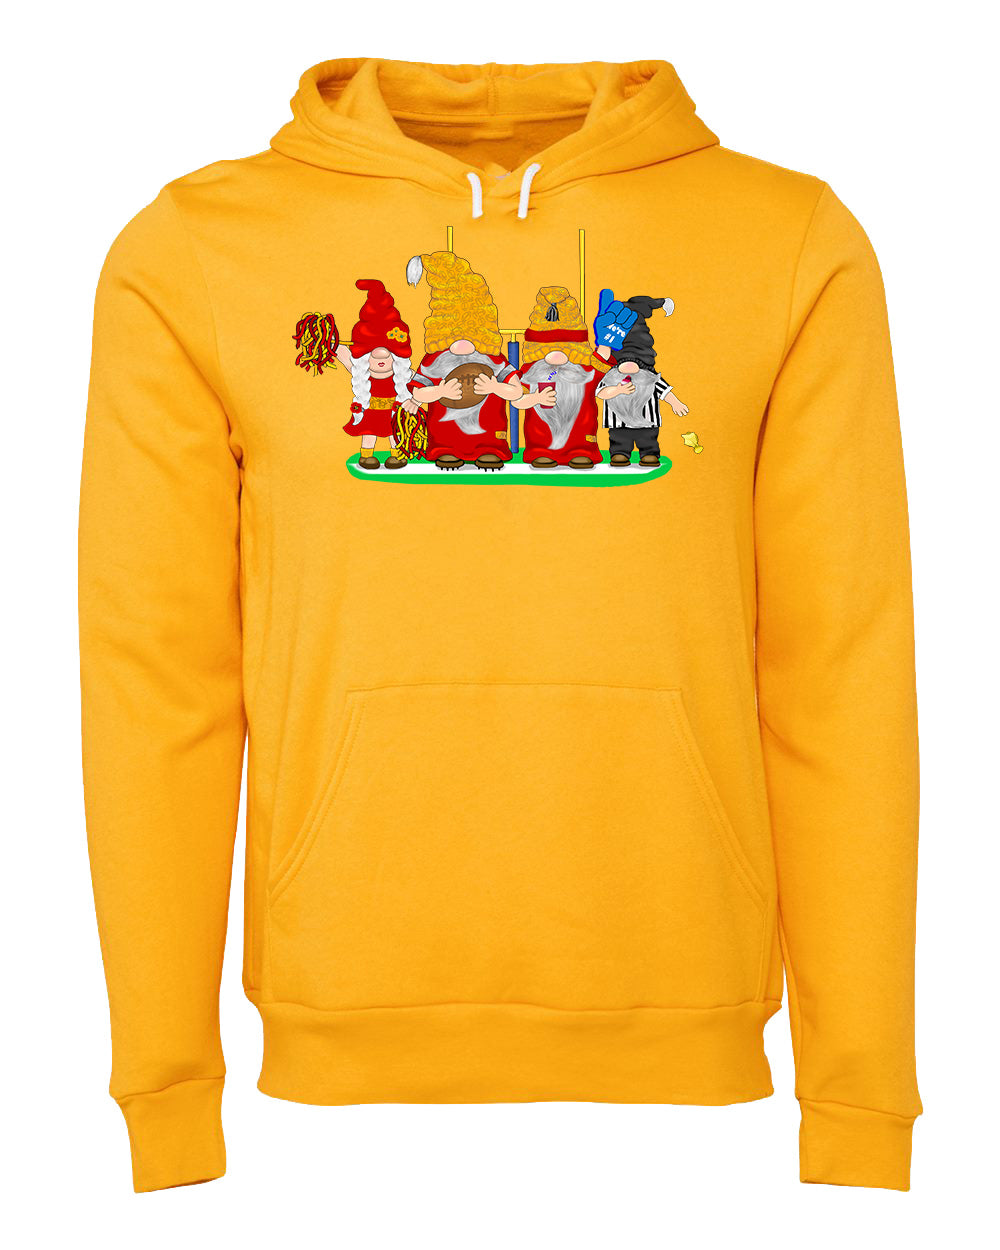 Red & Gold Football Gnomes (similar to Kansas City) on Hoodie